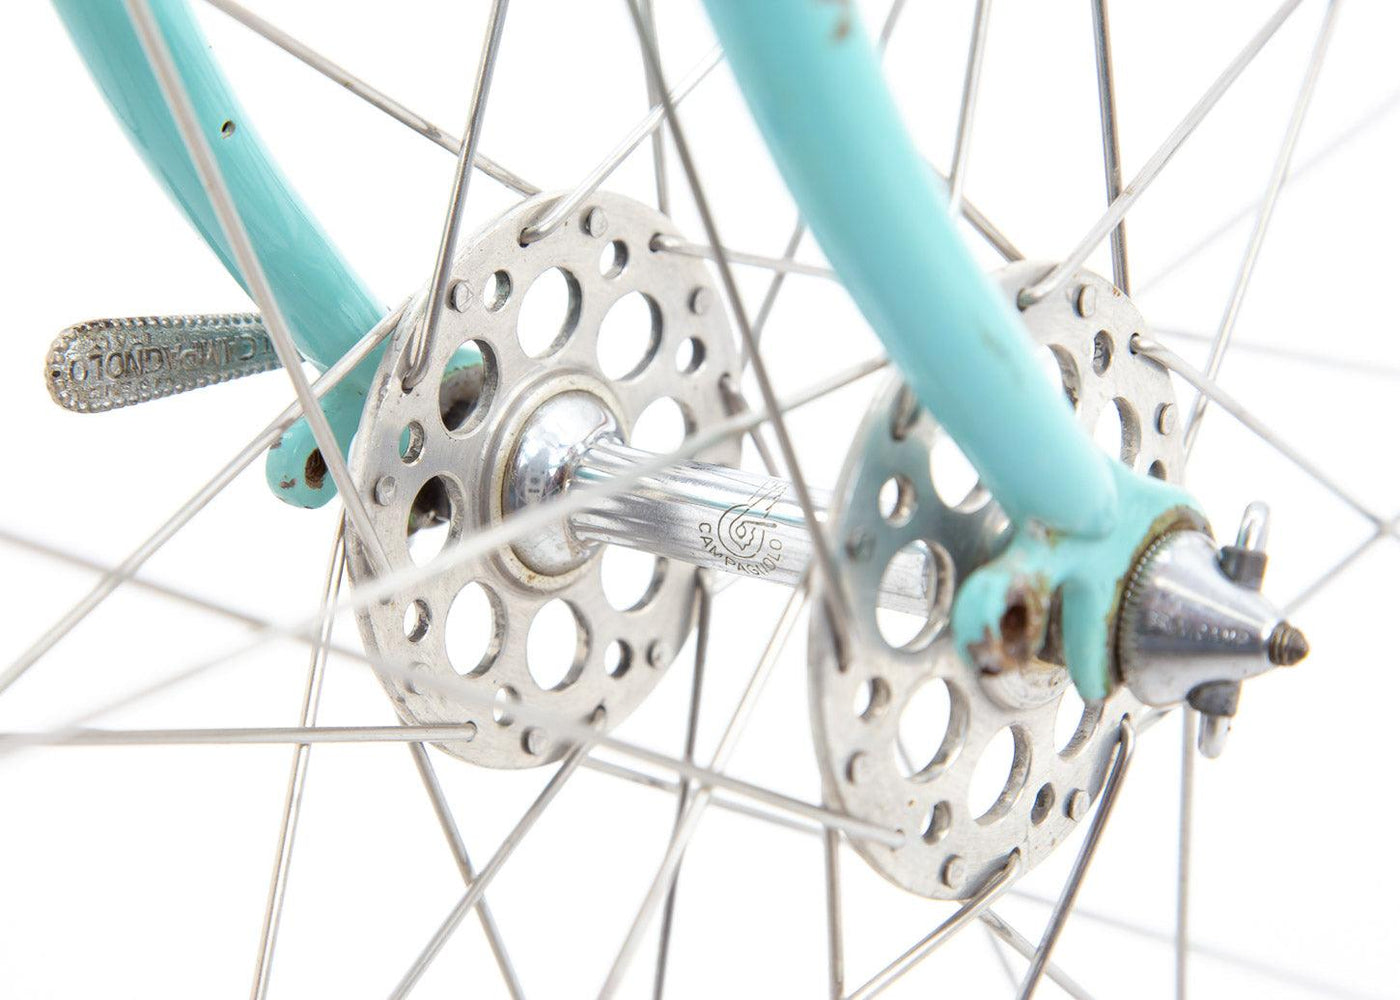 Bianchi Paris-Roubaix Classic Road Bicycle 1951 - Steel Vintage Bikes